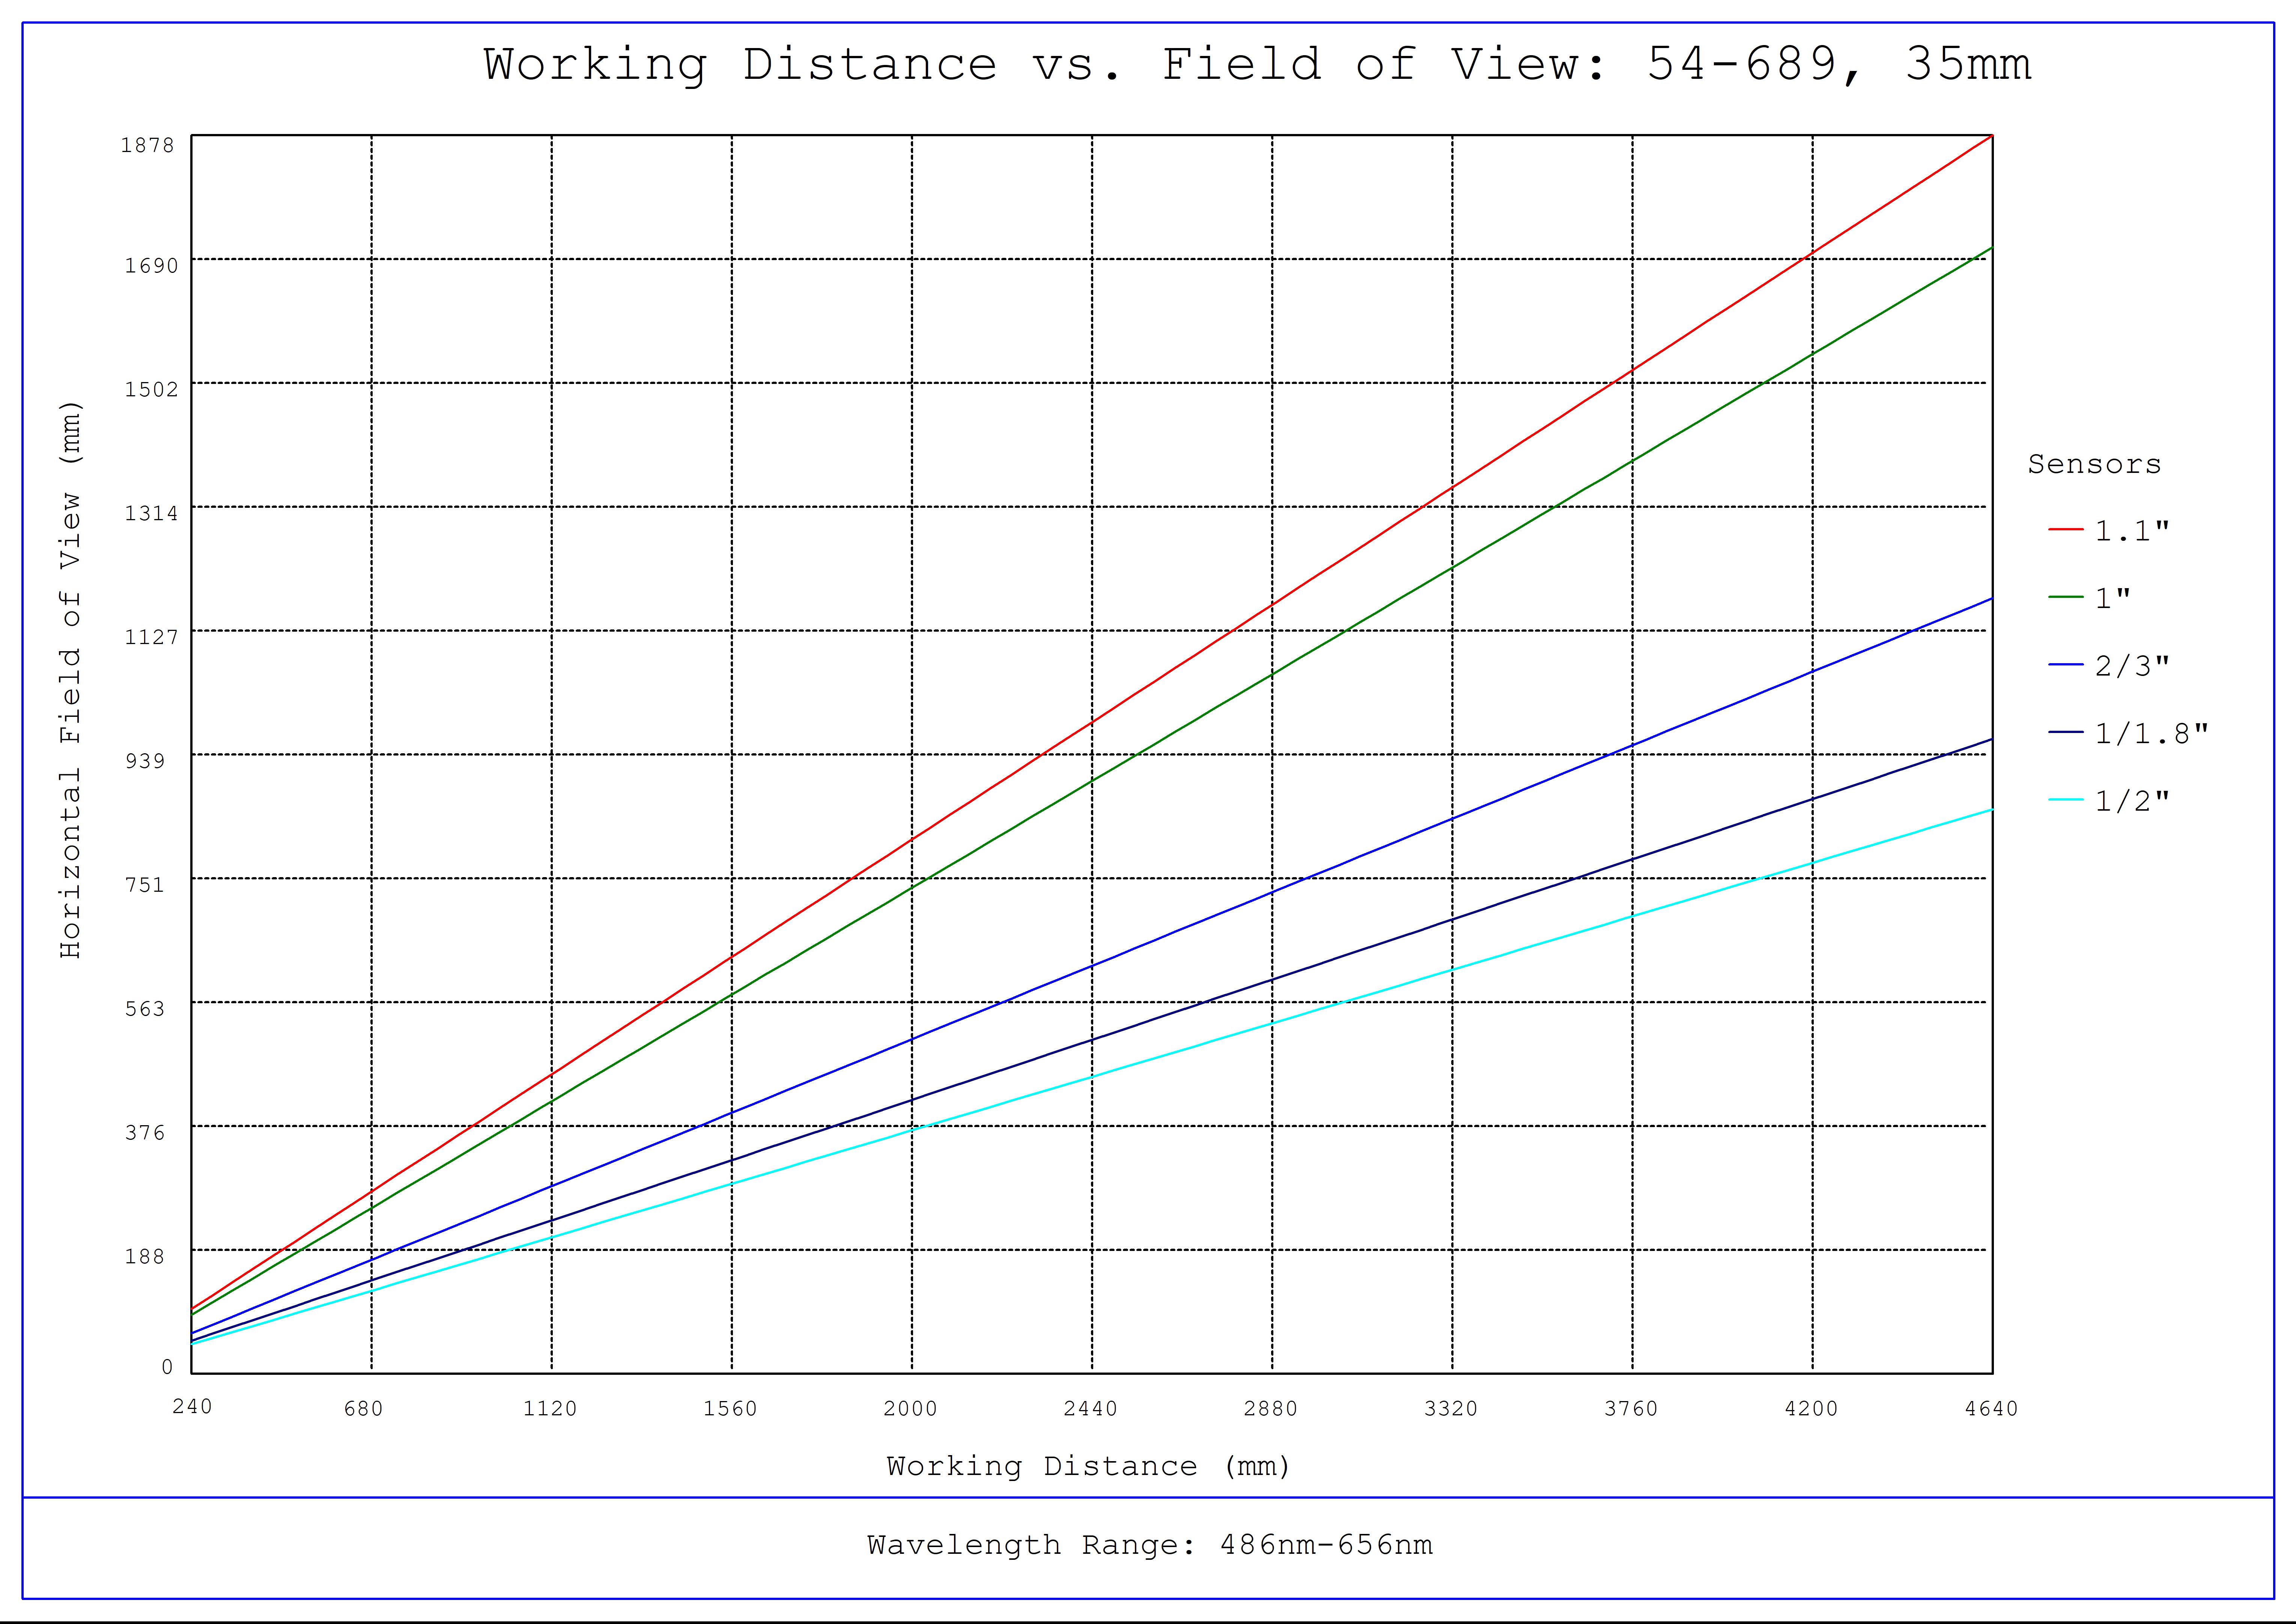 #54-689, 35mm DG Series Fixed Focal Length Lens, Working Distance versus Field of View Plot